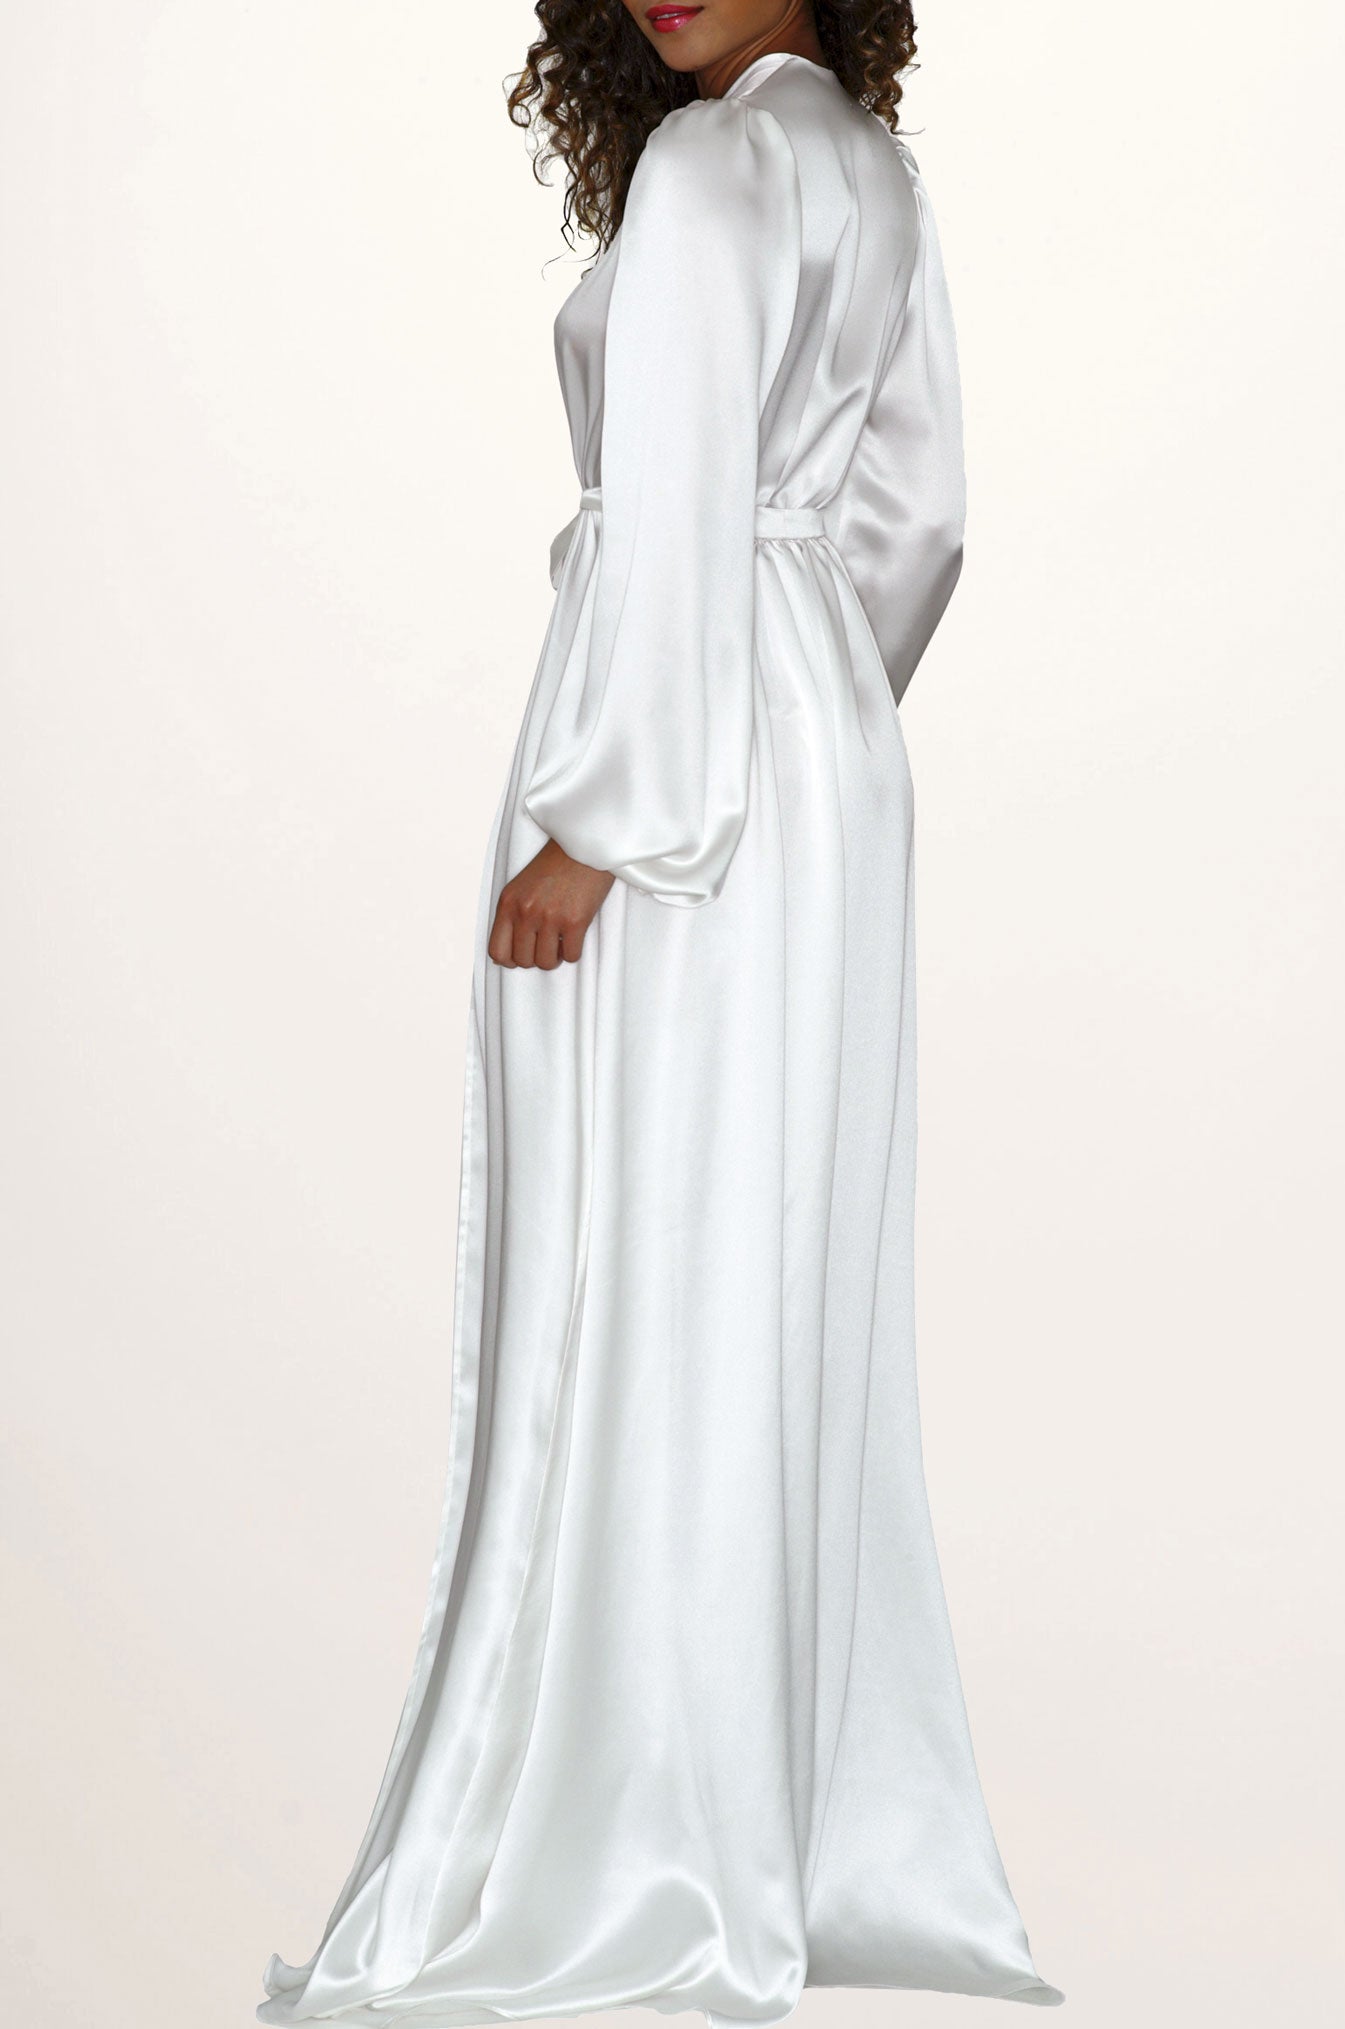 Luxury bridal robes for wedding boudoir photo shoots, made in the UK by designer Angela Friedman